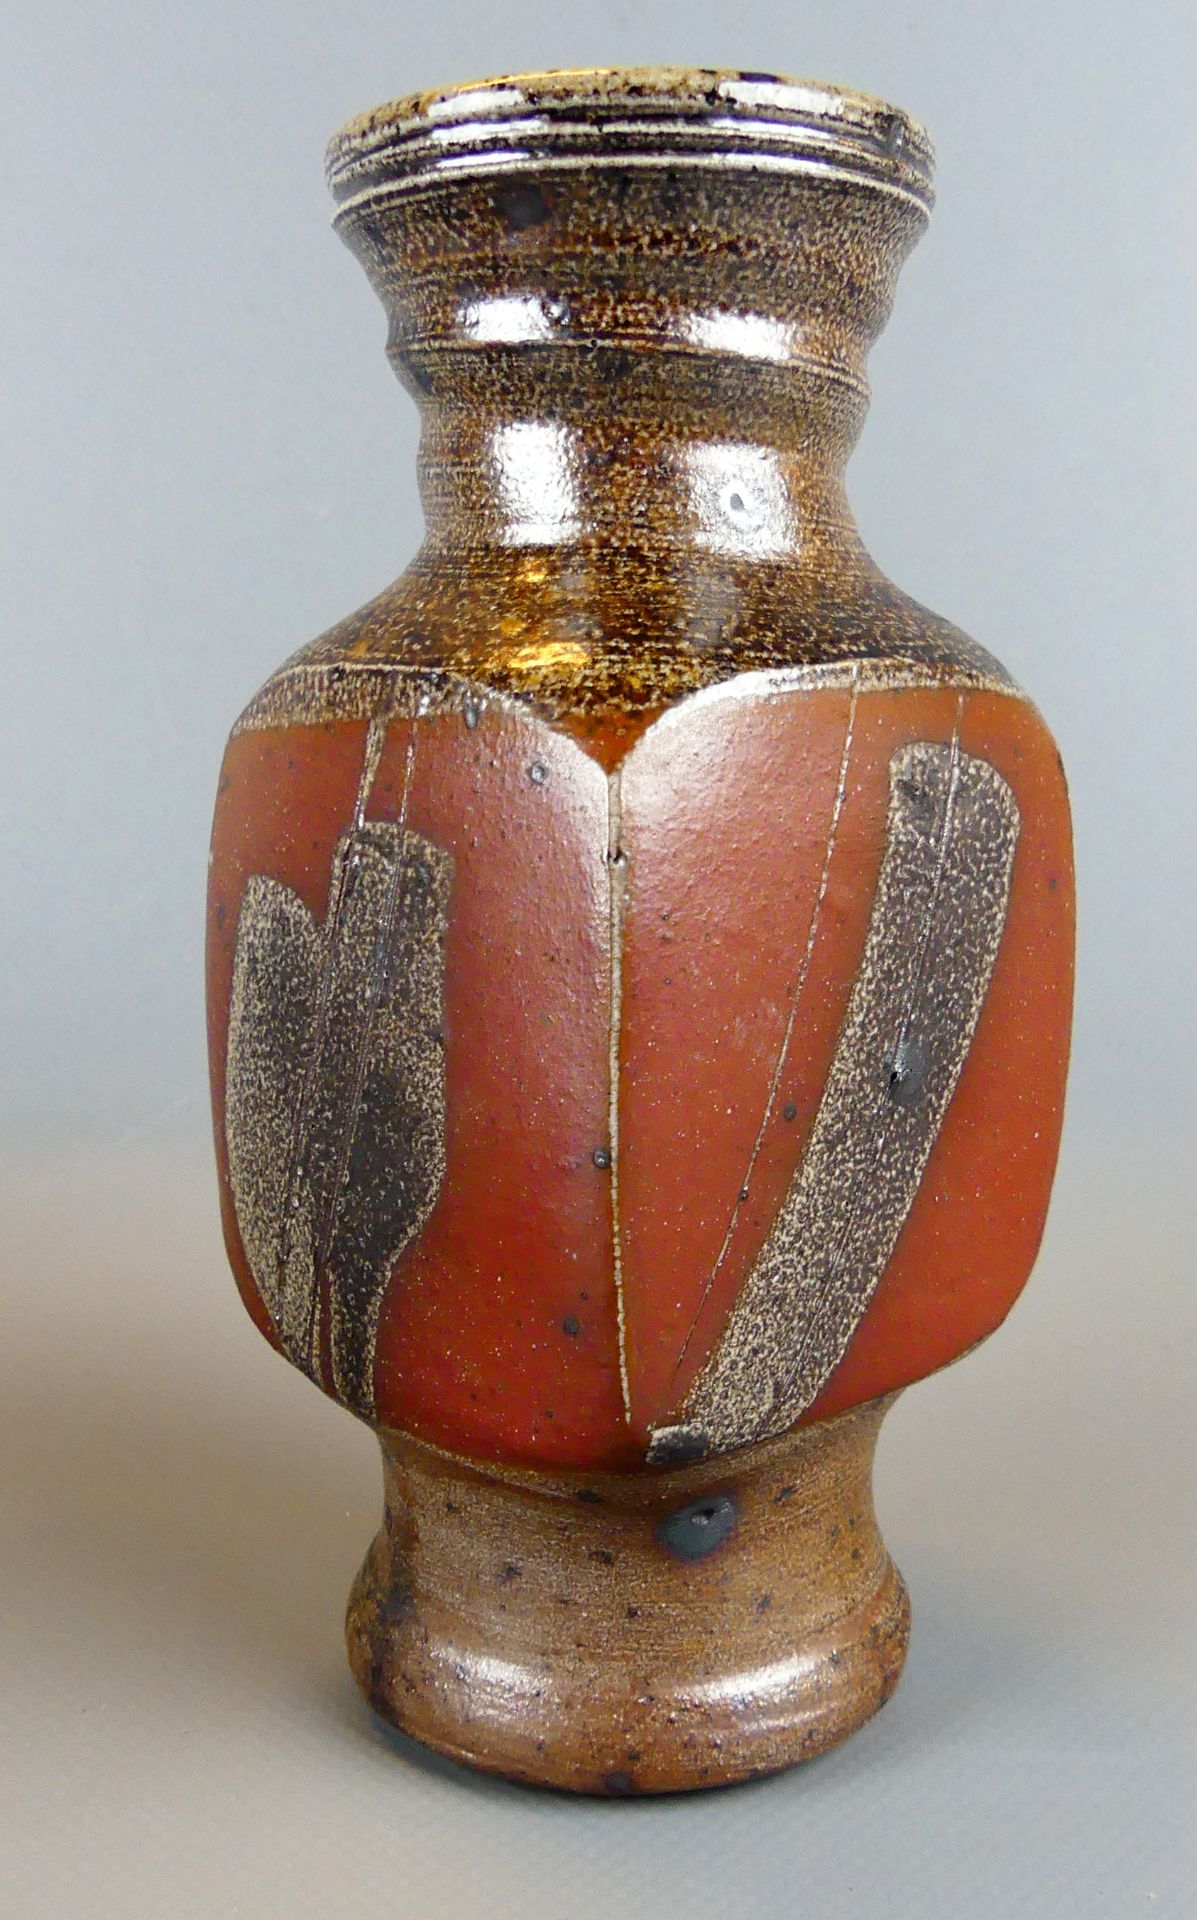 Vase, Keramik, eckige Bauchung, runder Fuß, verschiedene Ornamente, - Image 2 of 2